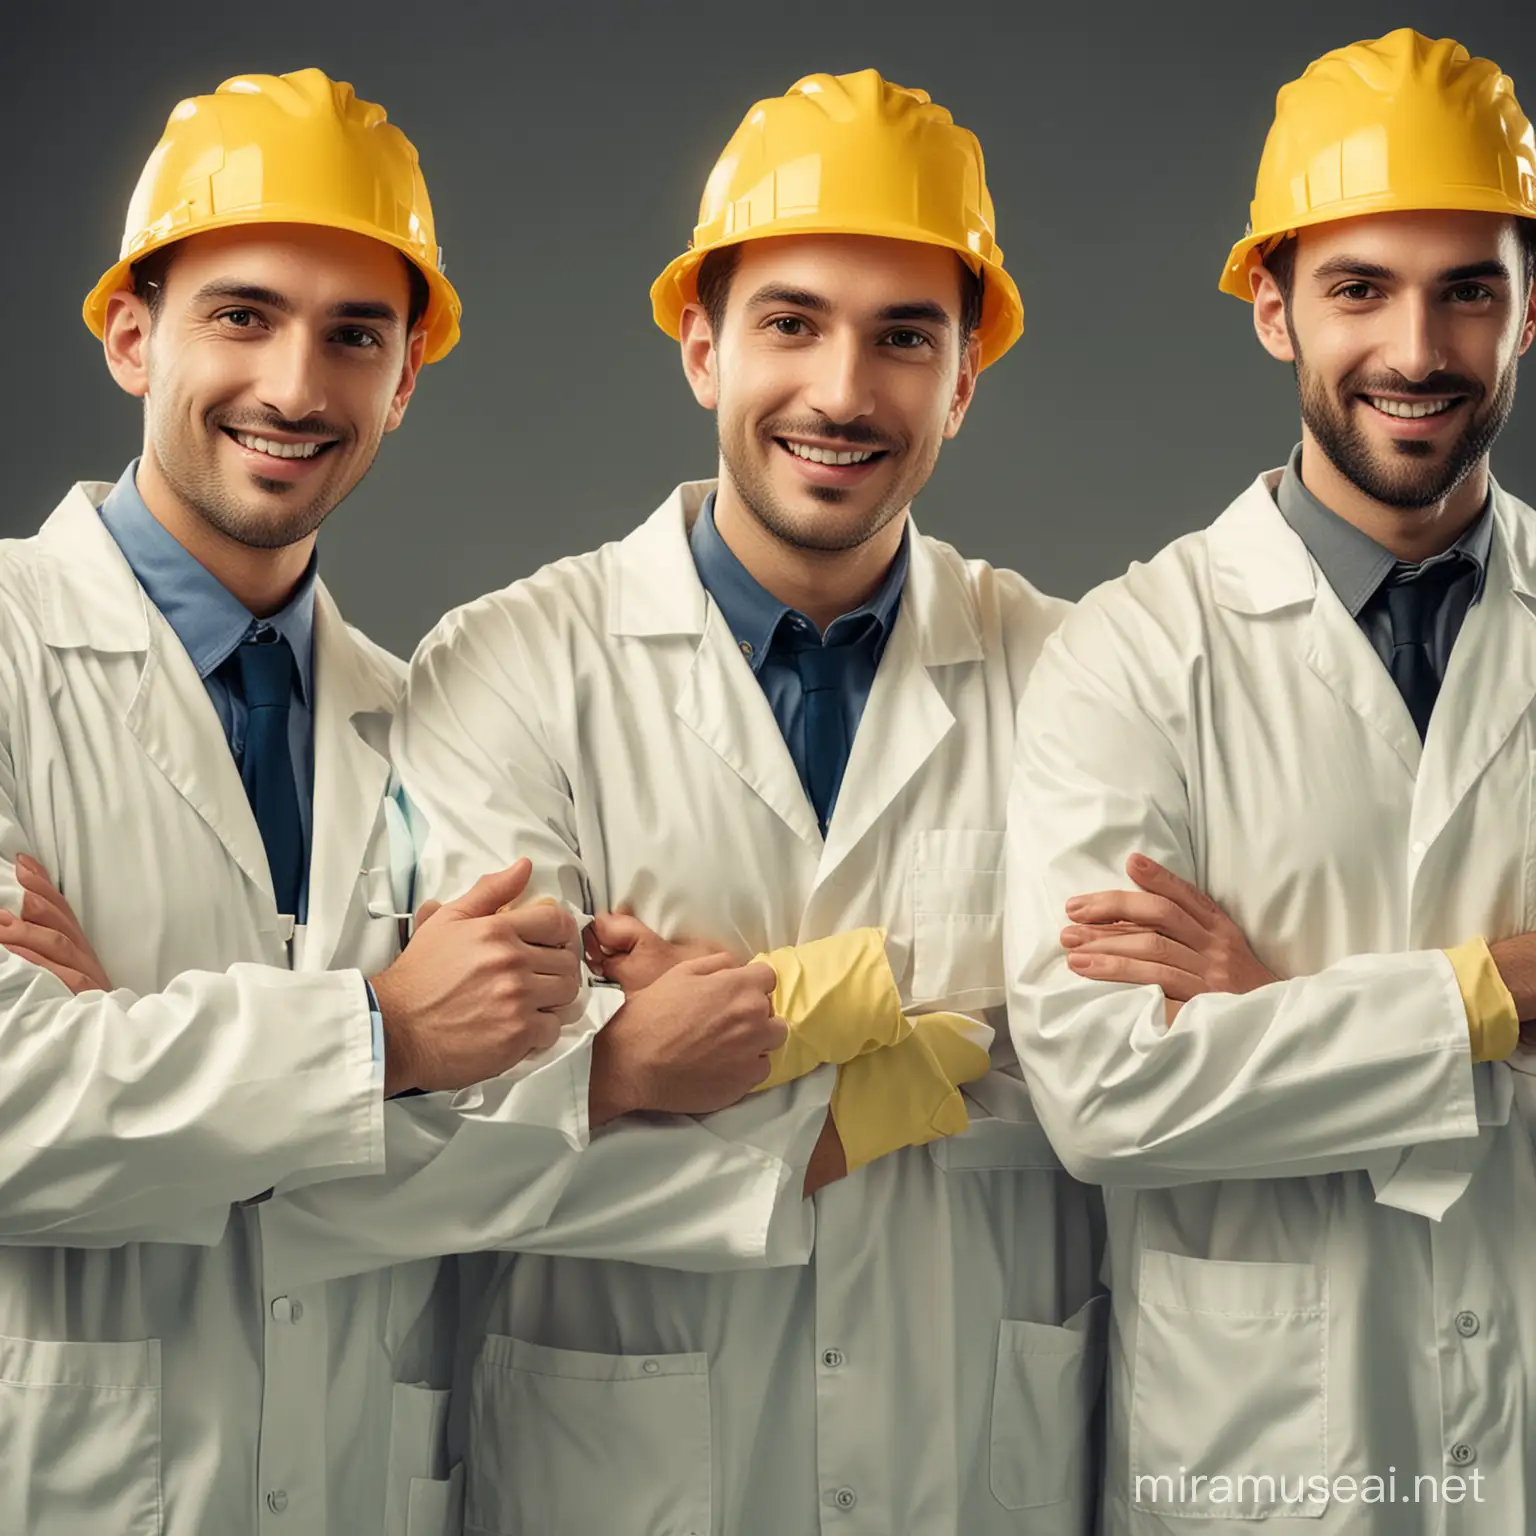 Team of Men Doctors in Yellow Safety Caps